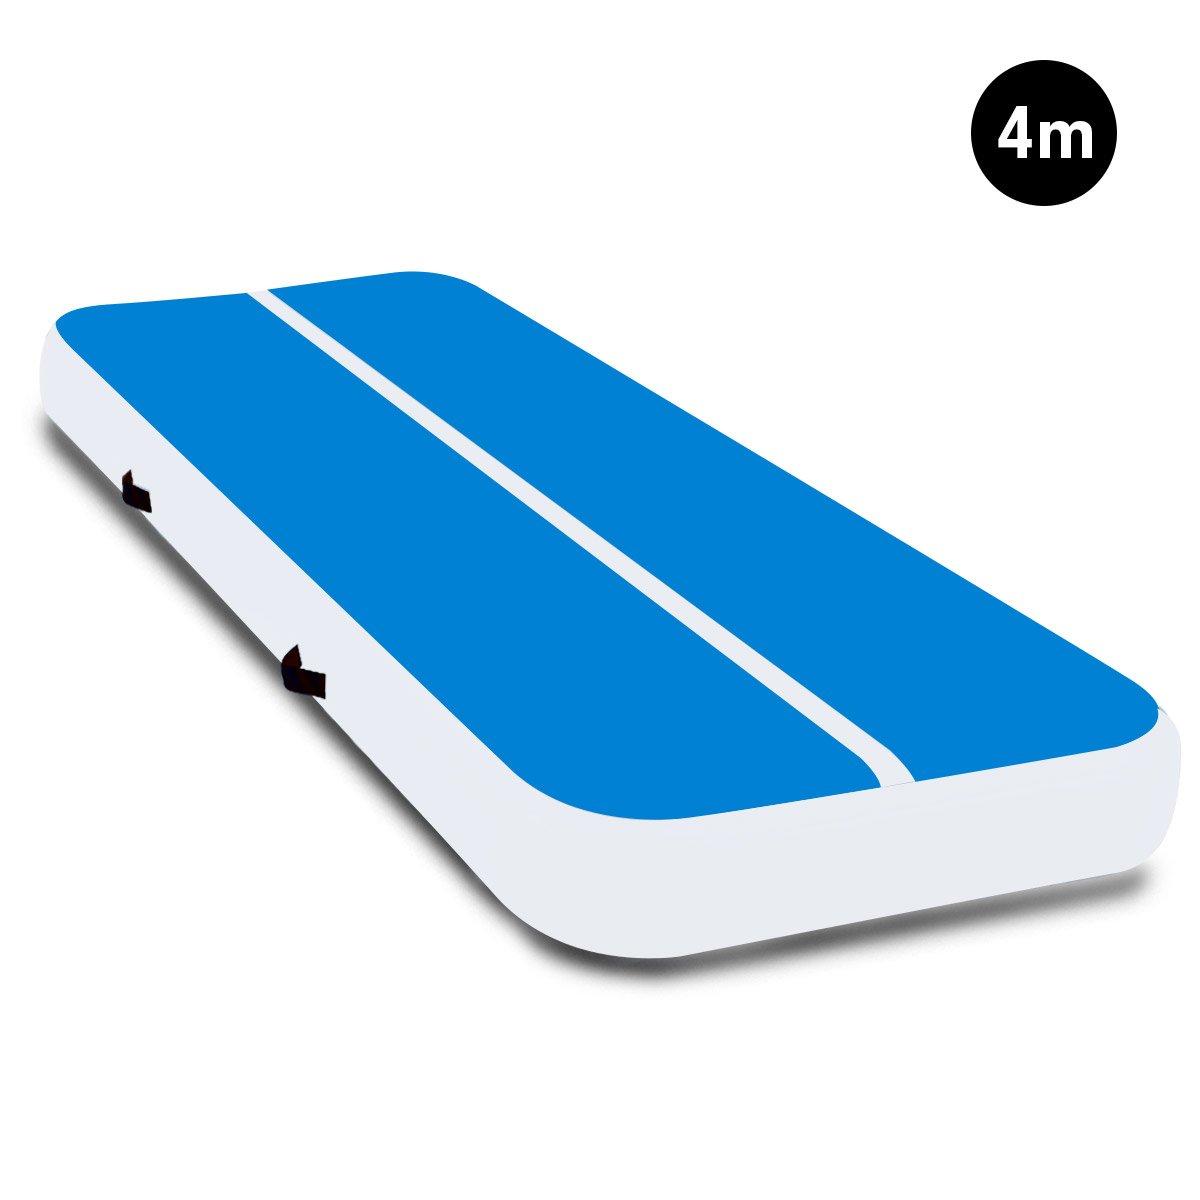 4m x 2m Air Track Gymnastics Mat Tumbling Exercise - Blue White 2